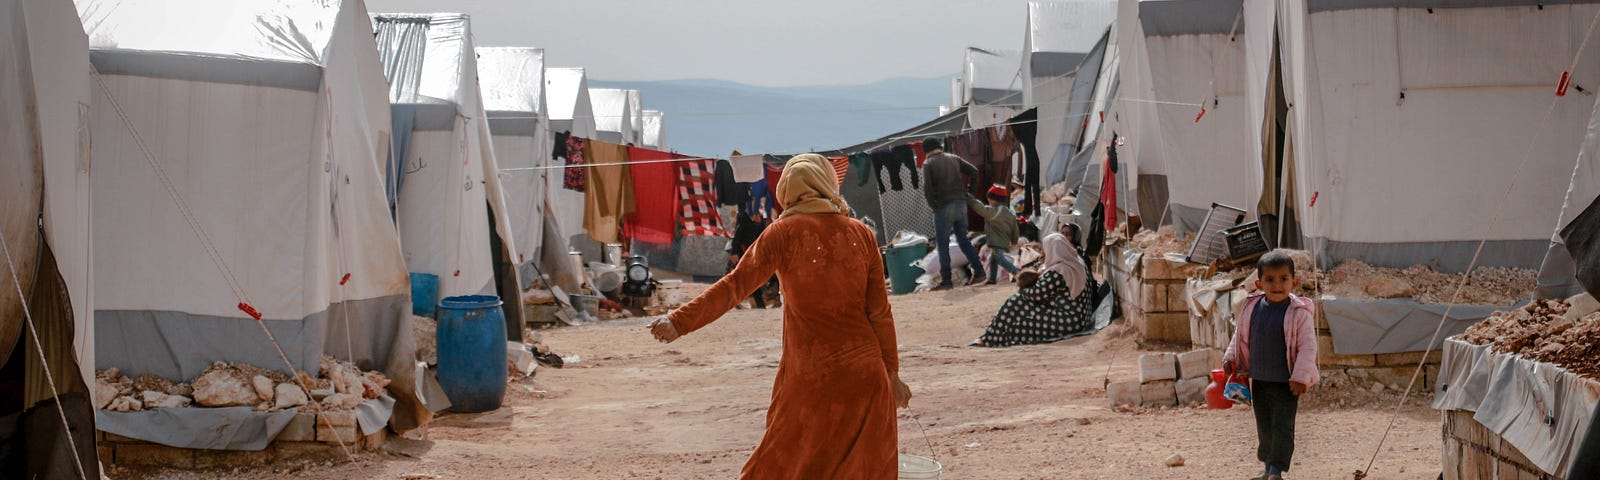 A woman walking in a refugee camp in Idlib, Syria